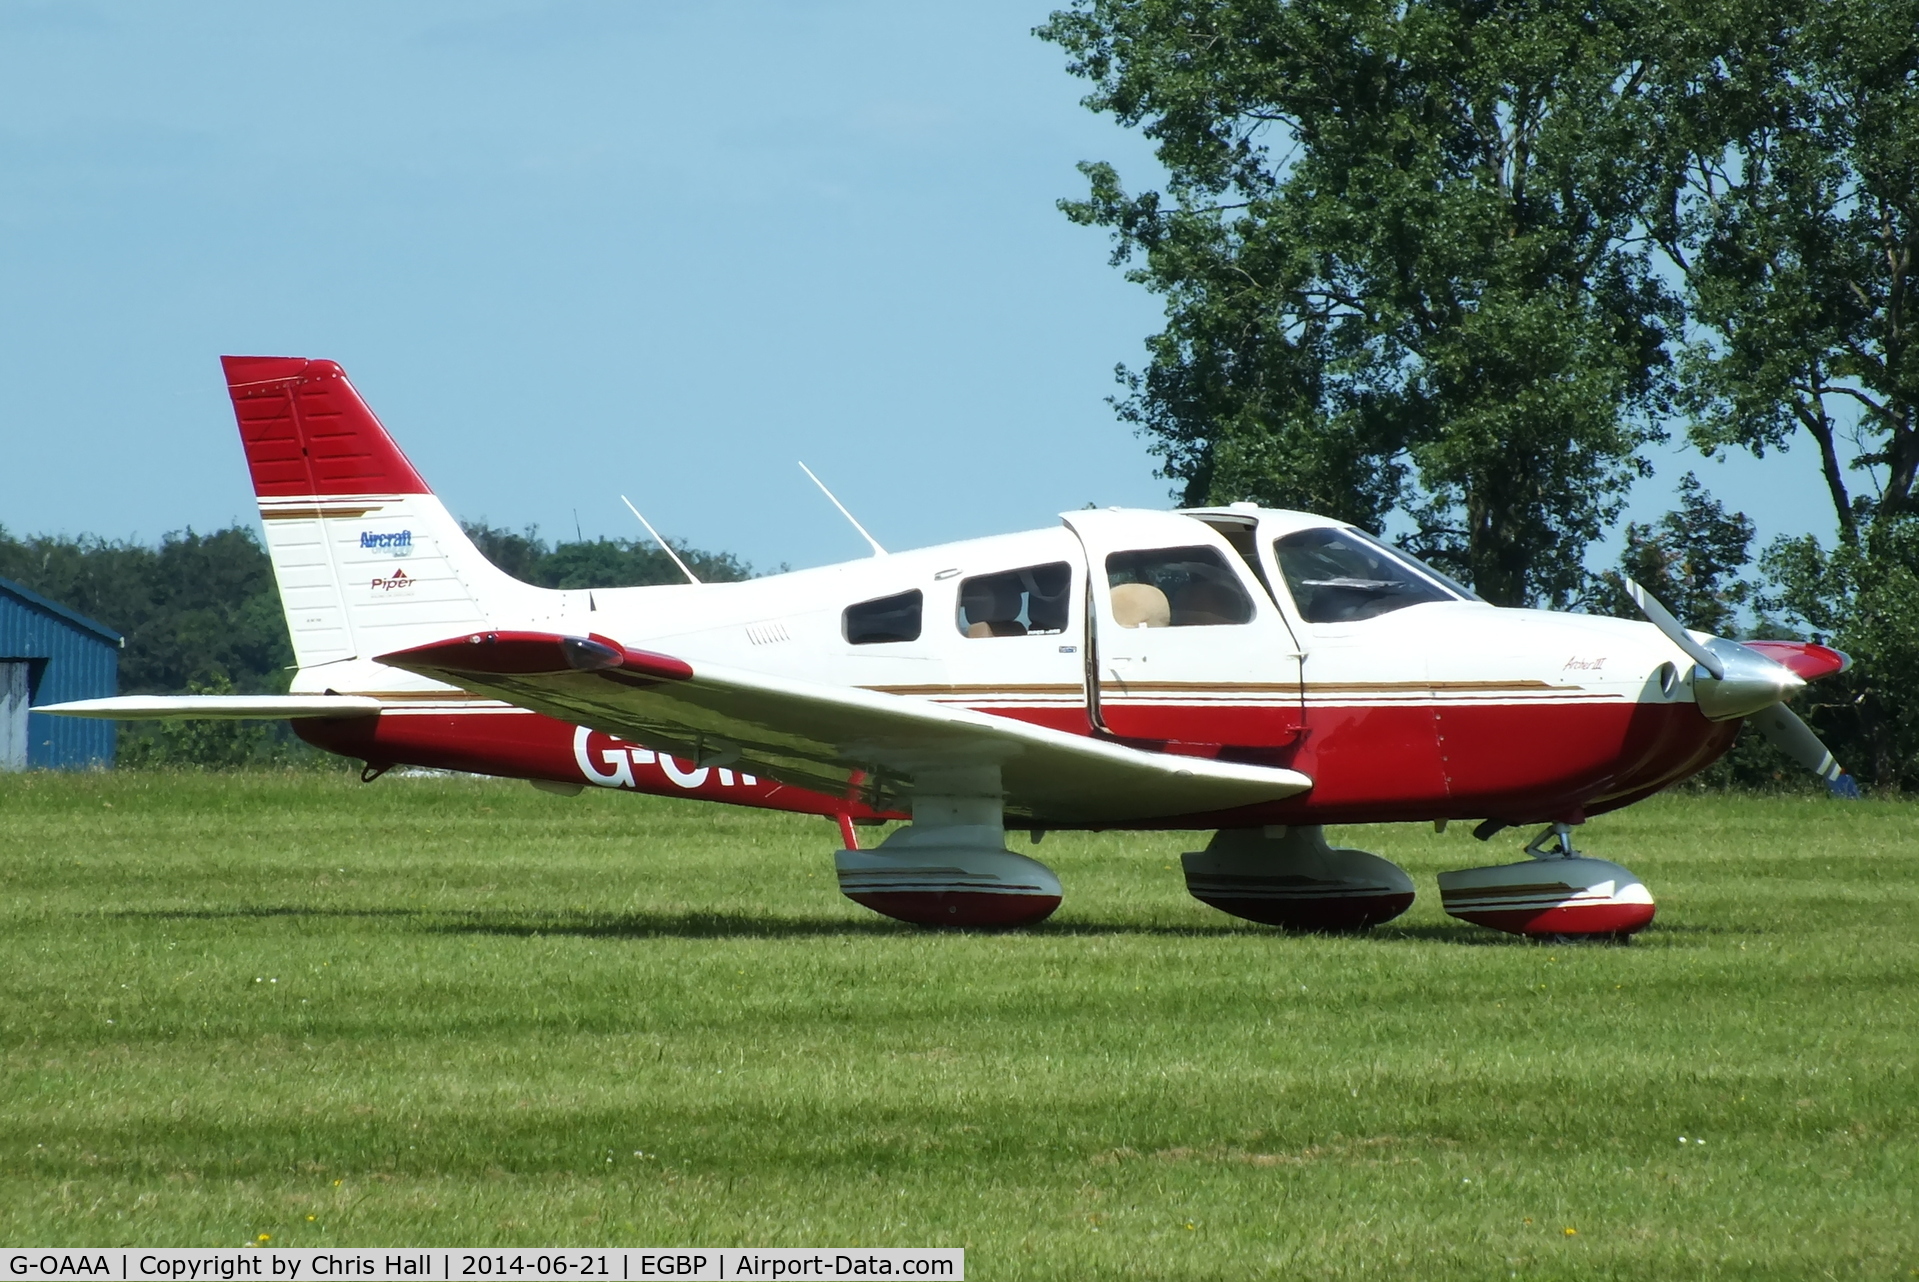 G-OAAA, 1993 Piper PA-28-161 Cherokee Warrior II C/N 2816107, Redhill Air Services Ltd